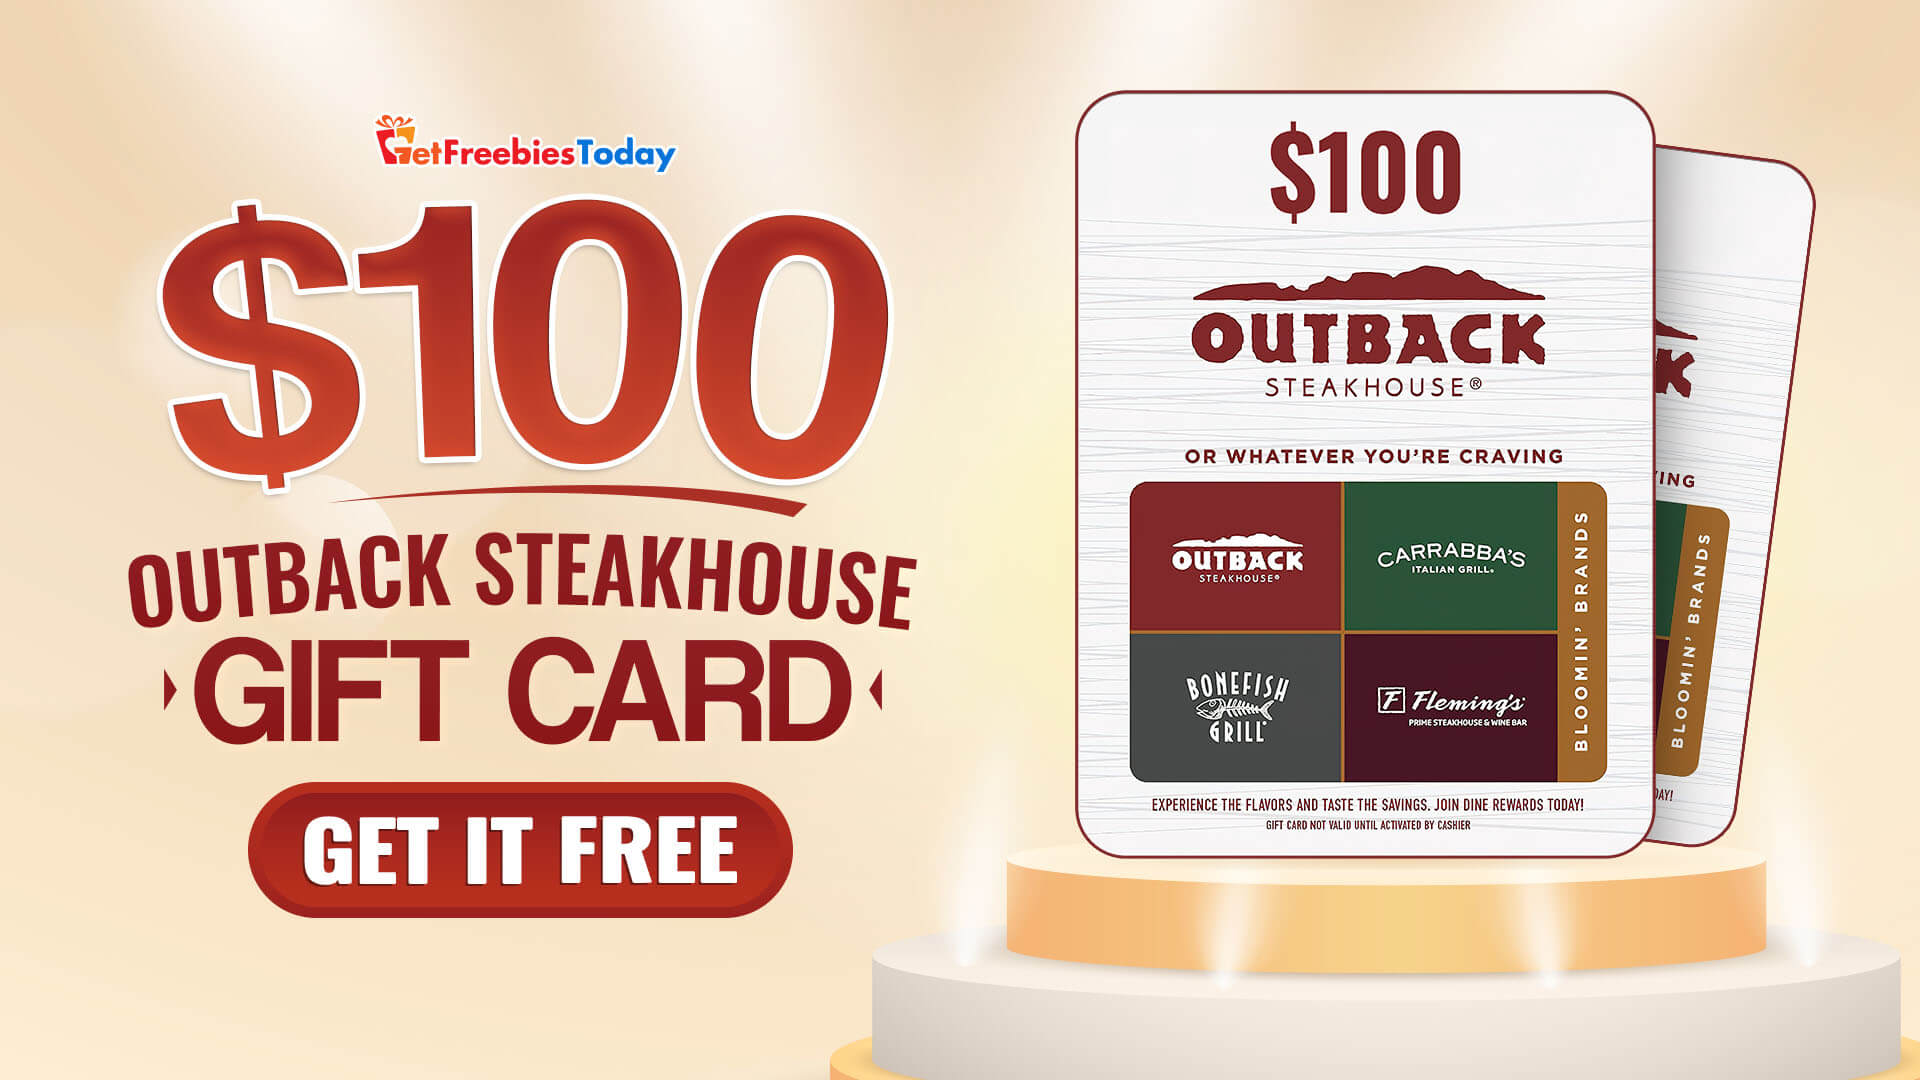 Free $100 Outback Steakhouse Gift Card | GetFreebiesToday.com